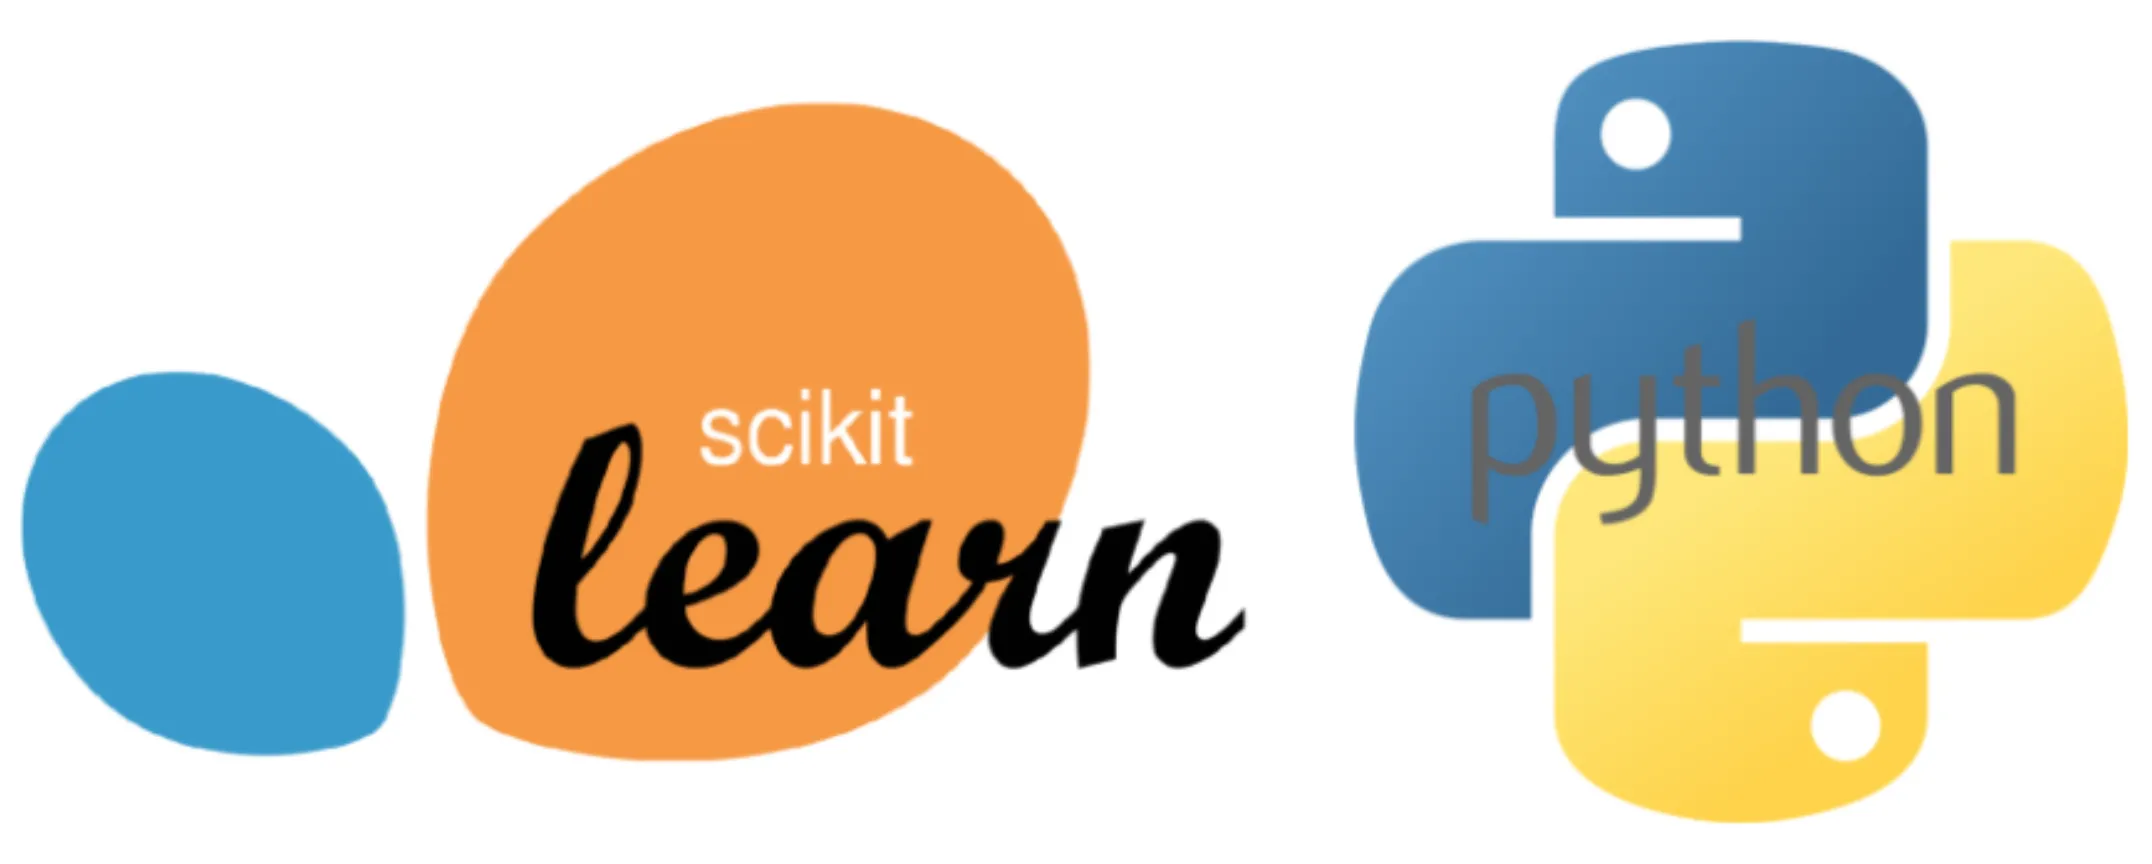 Scikit-learn Datasets 1: make_classification